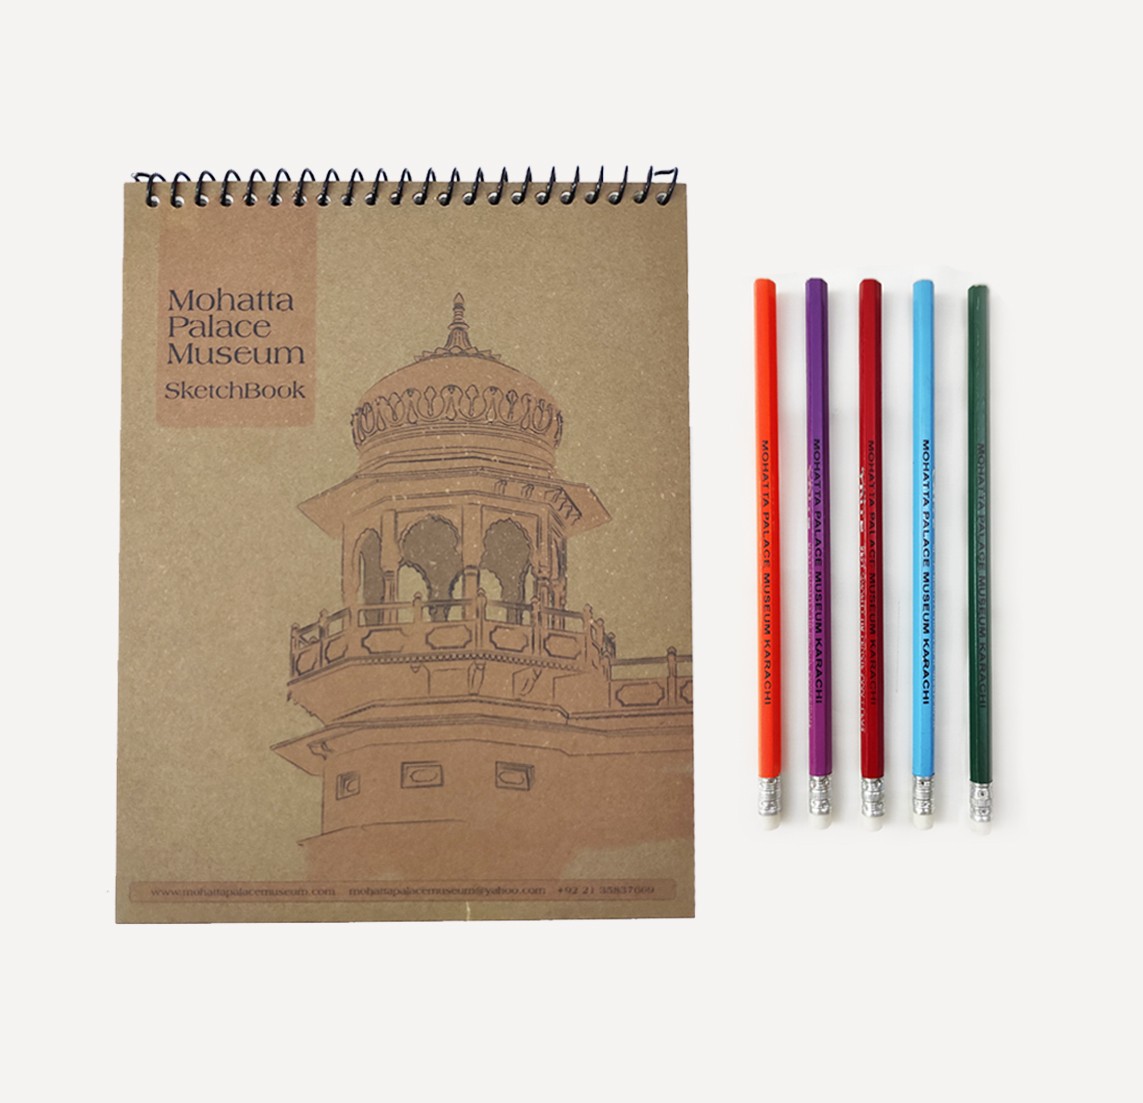 Sketchbook and 5 Pencils - Discount Deal